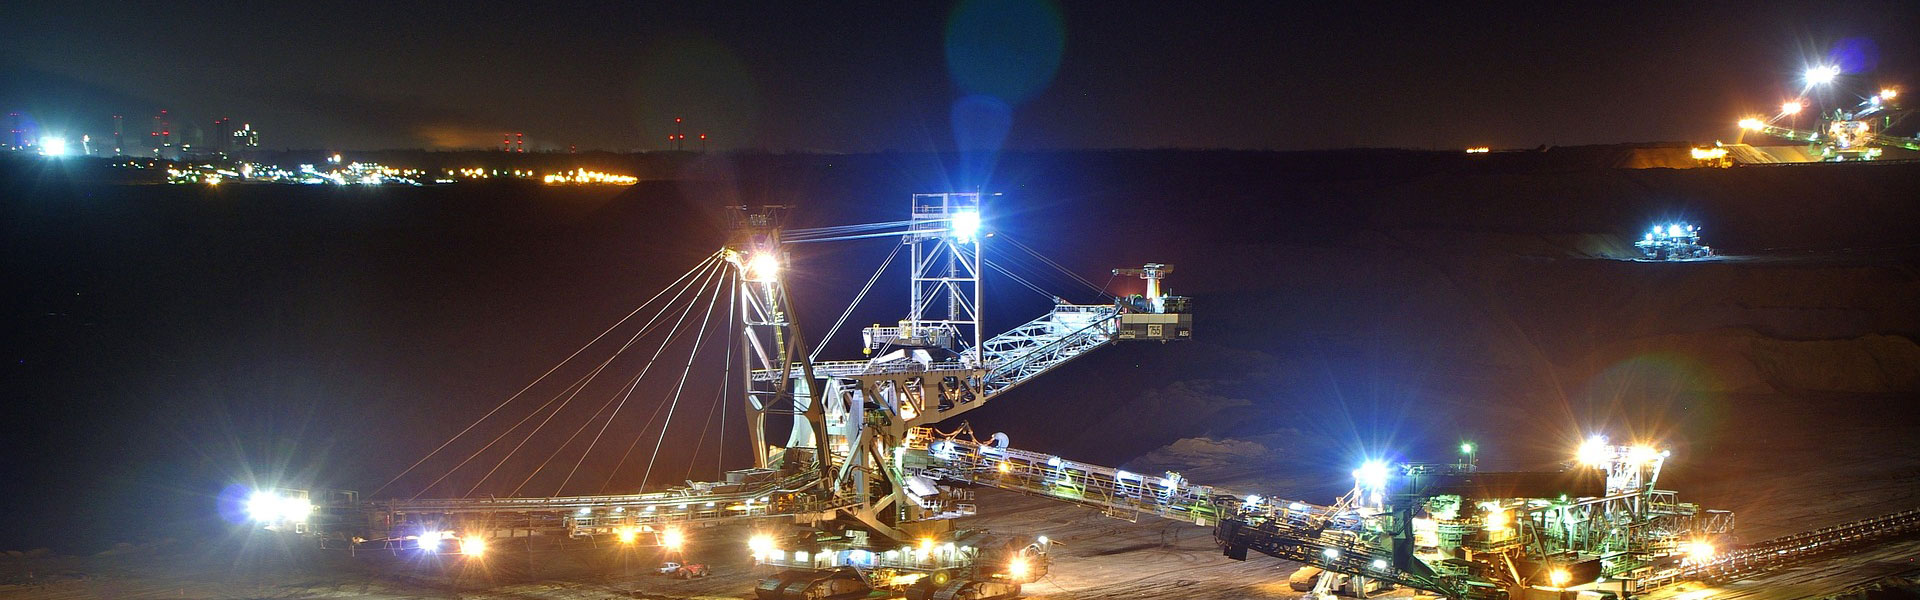 Nighttime photo of a mining operation